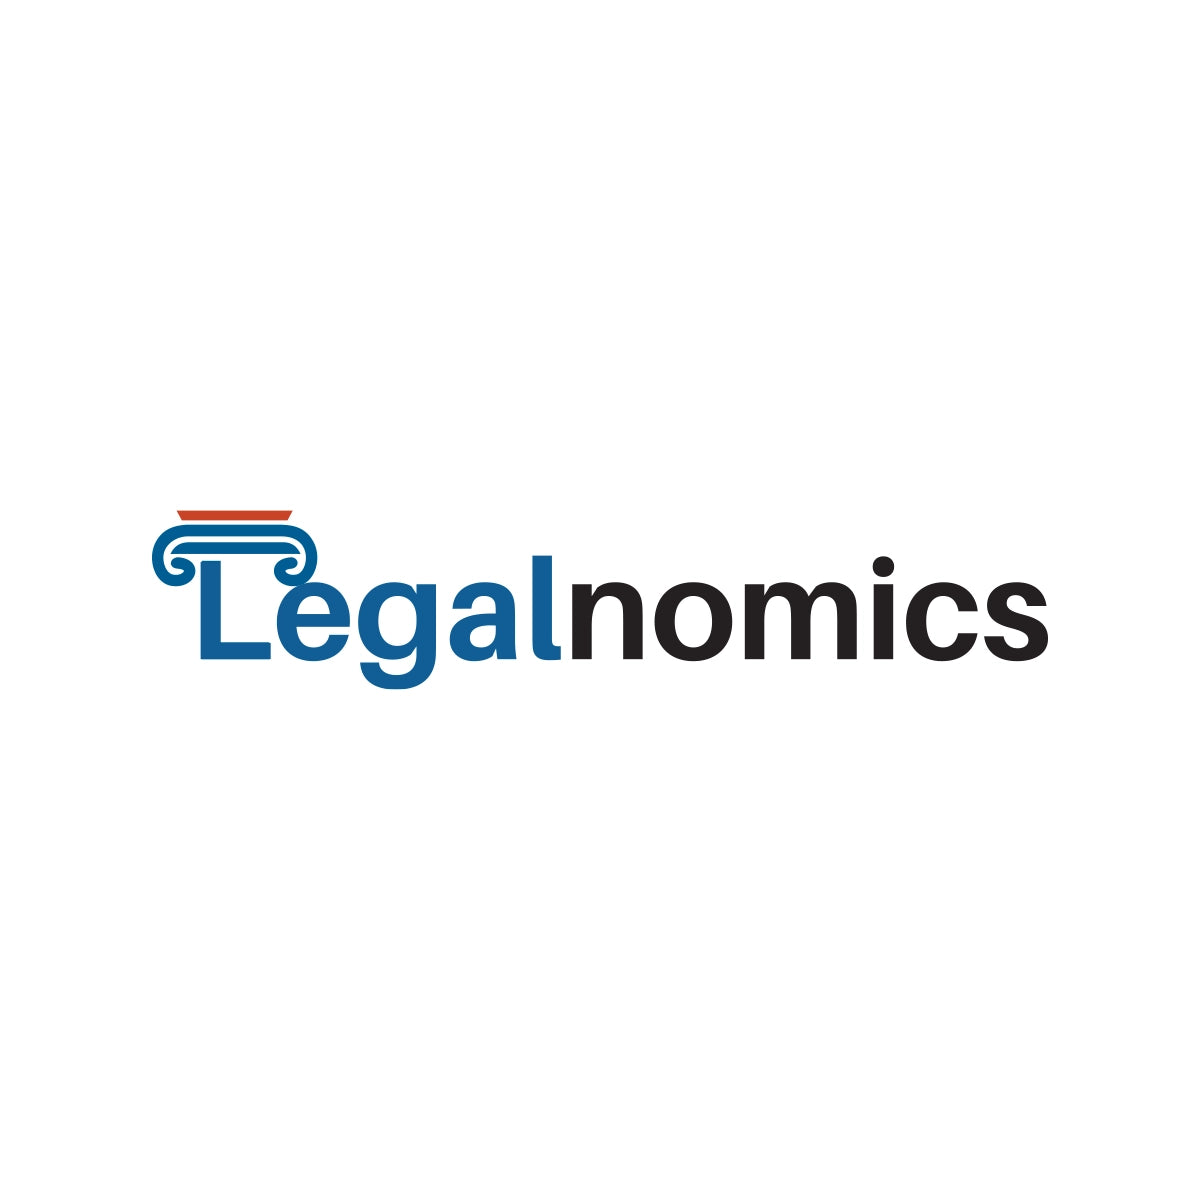 Legalnomics.com